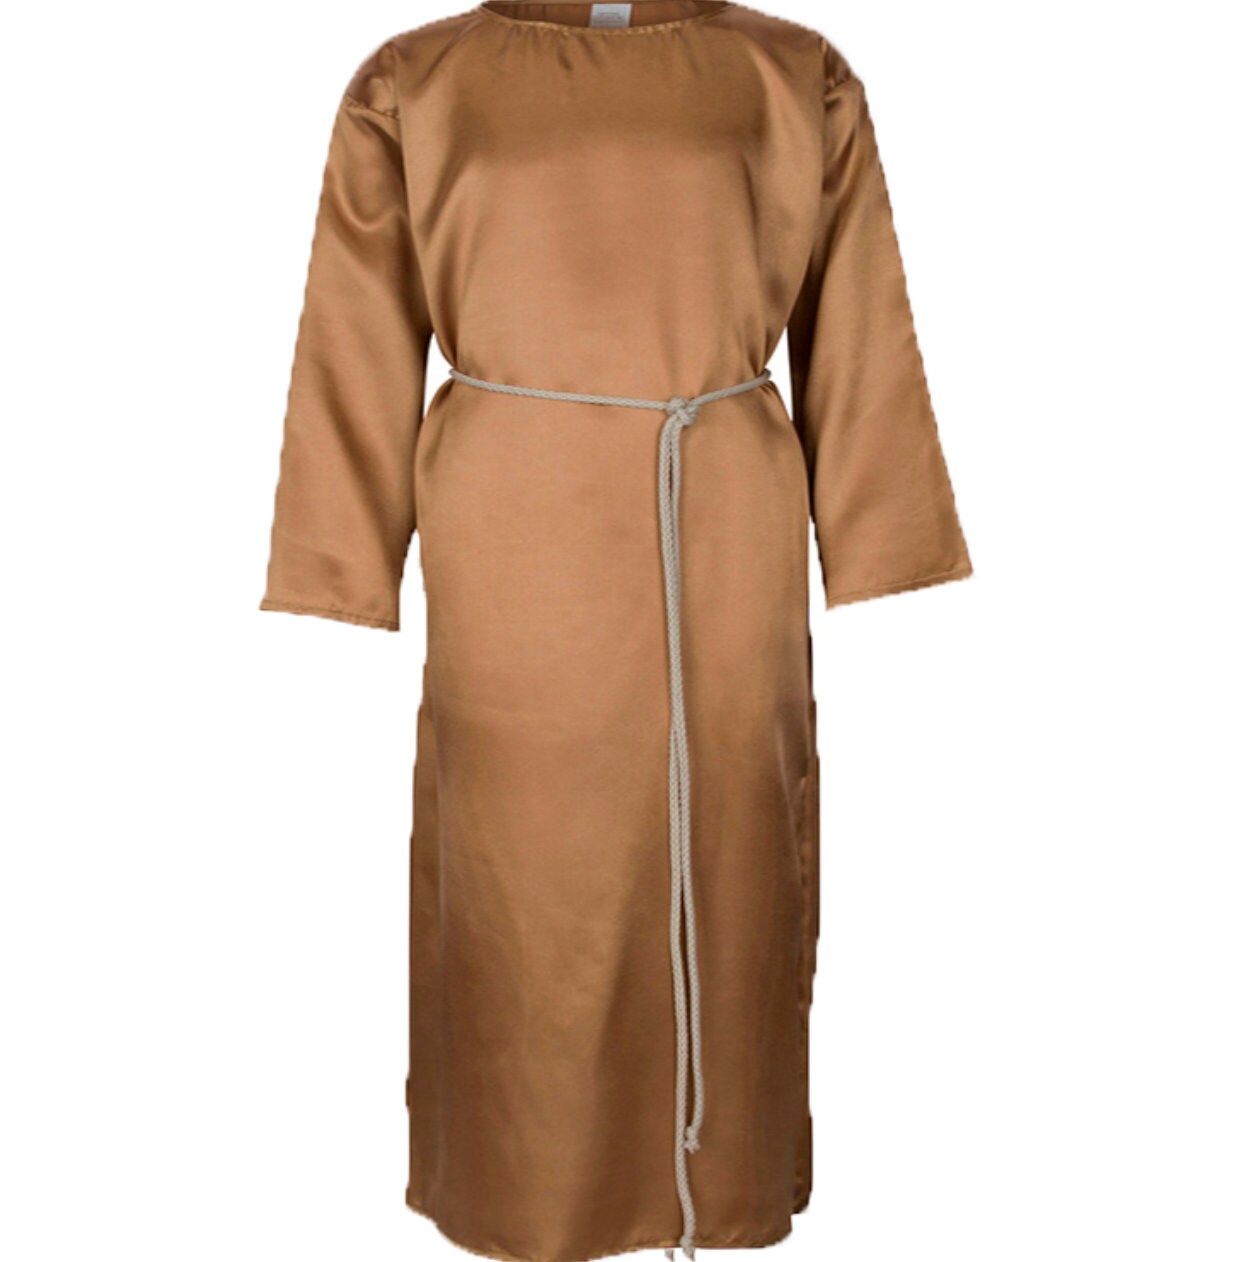 Children's Biblical Clothing Magi Robe